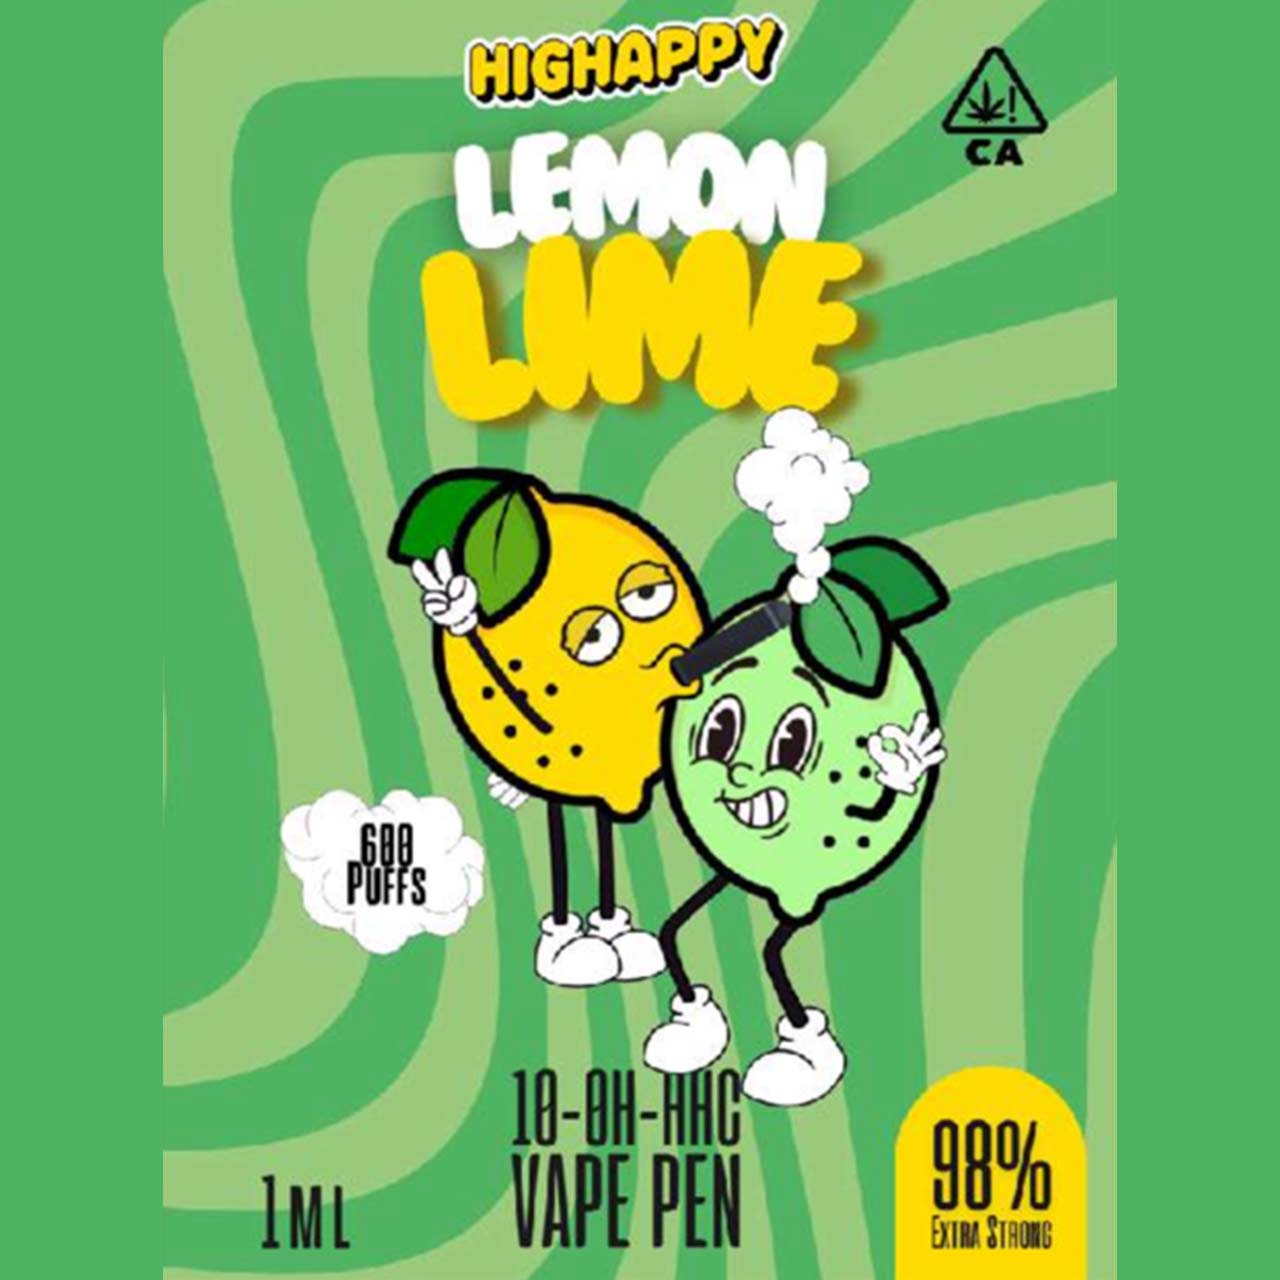 Highappy 10-OH-HHC Vape - Lemon Lime 1ml